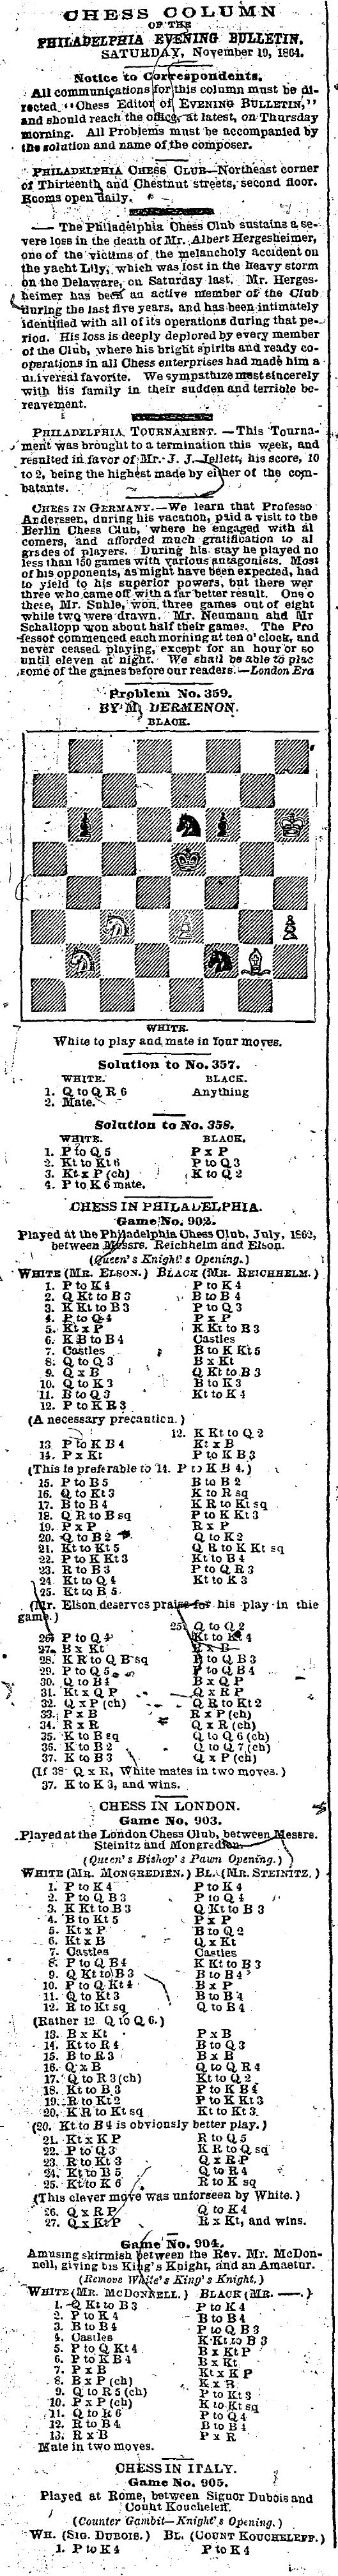 1864.11.19-01 Philadelphia Daily Evening Bulletin.jpg